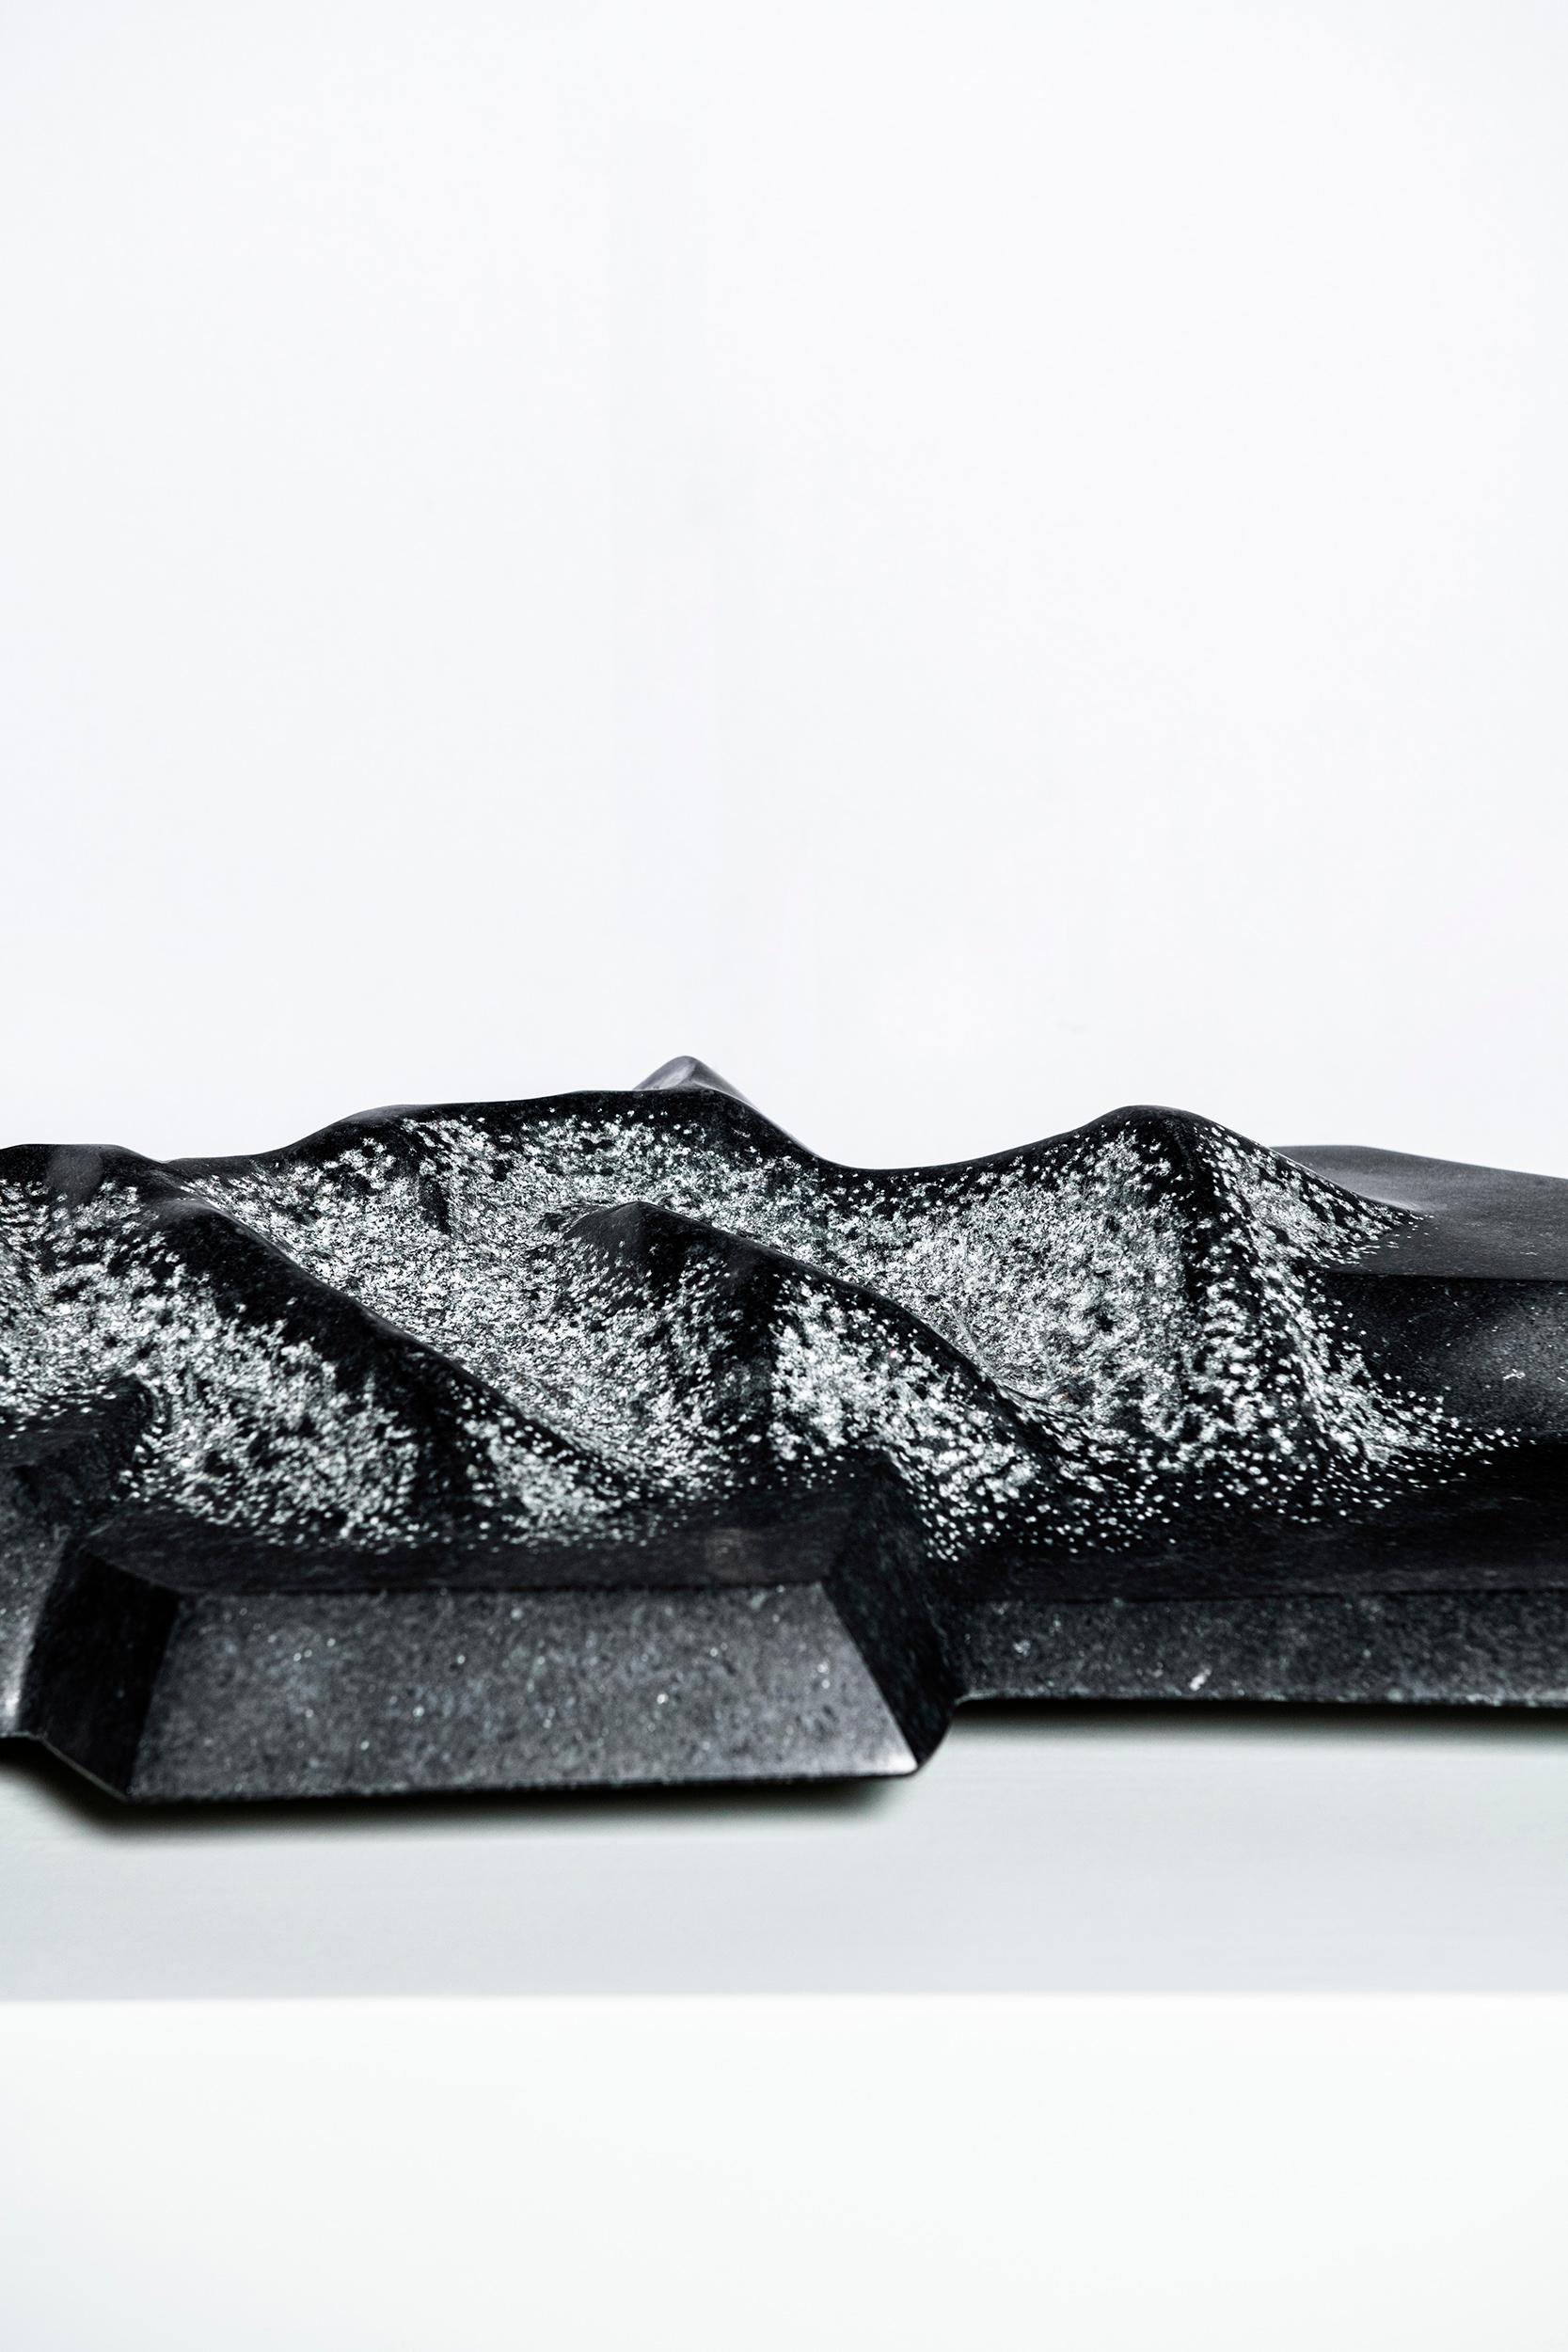 Modern Granite Sculpture by Juan Pablo Marturano, Argentina, 2019 For Sale